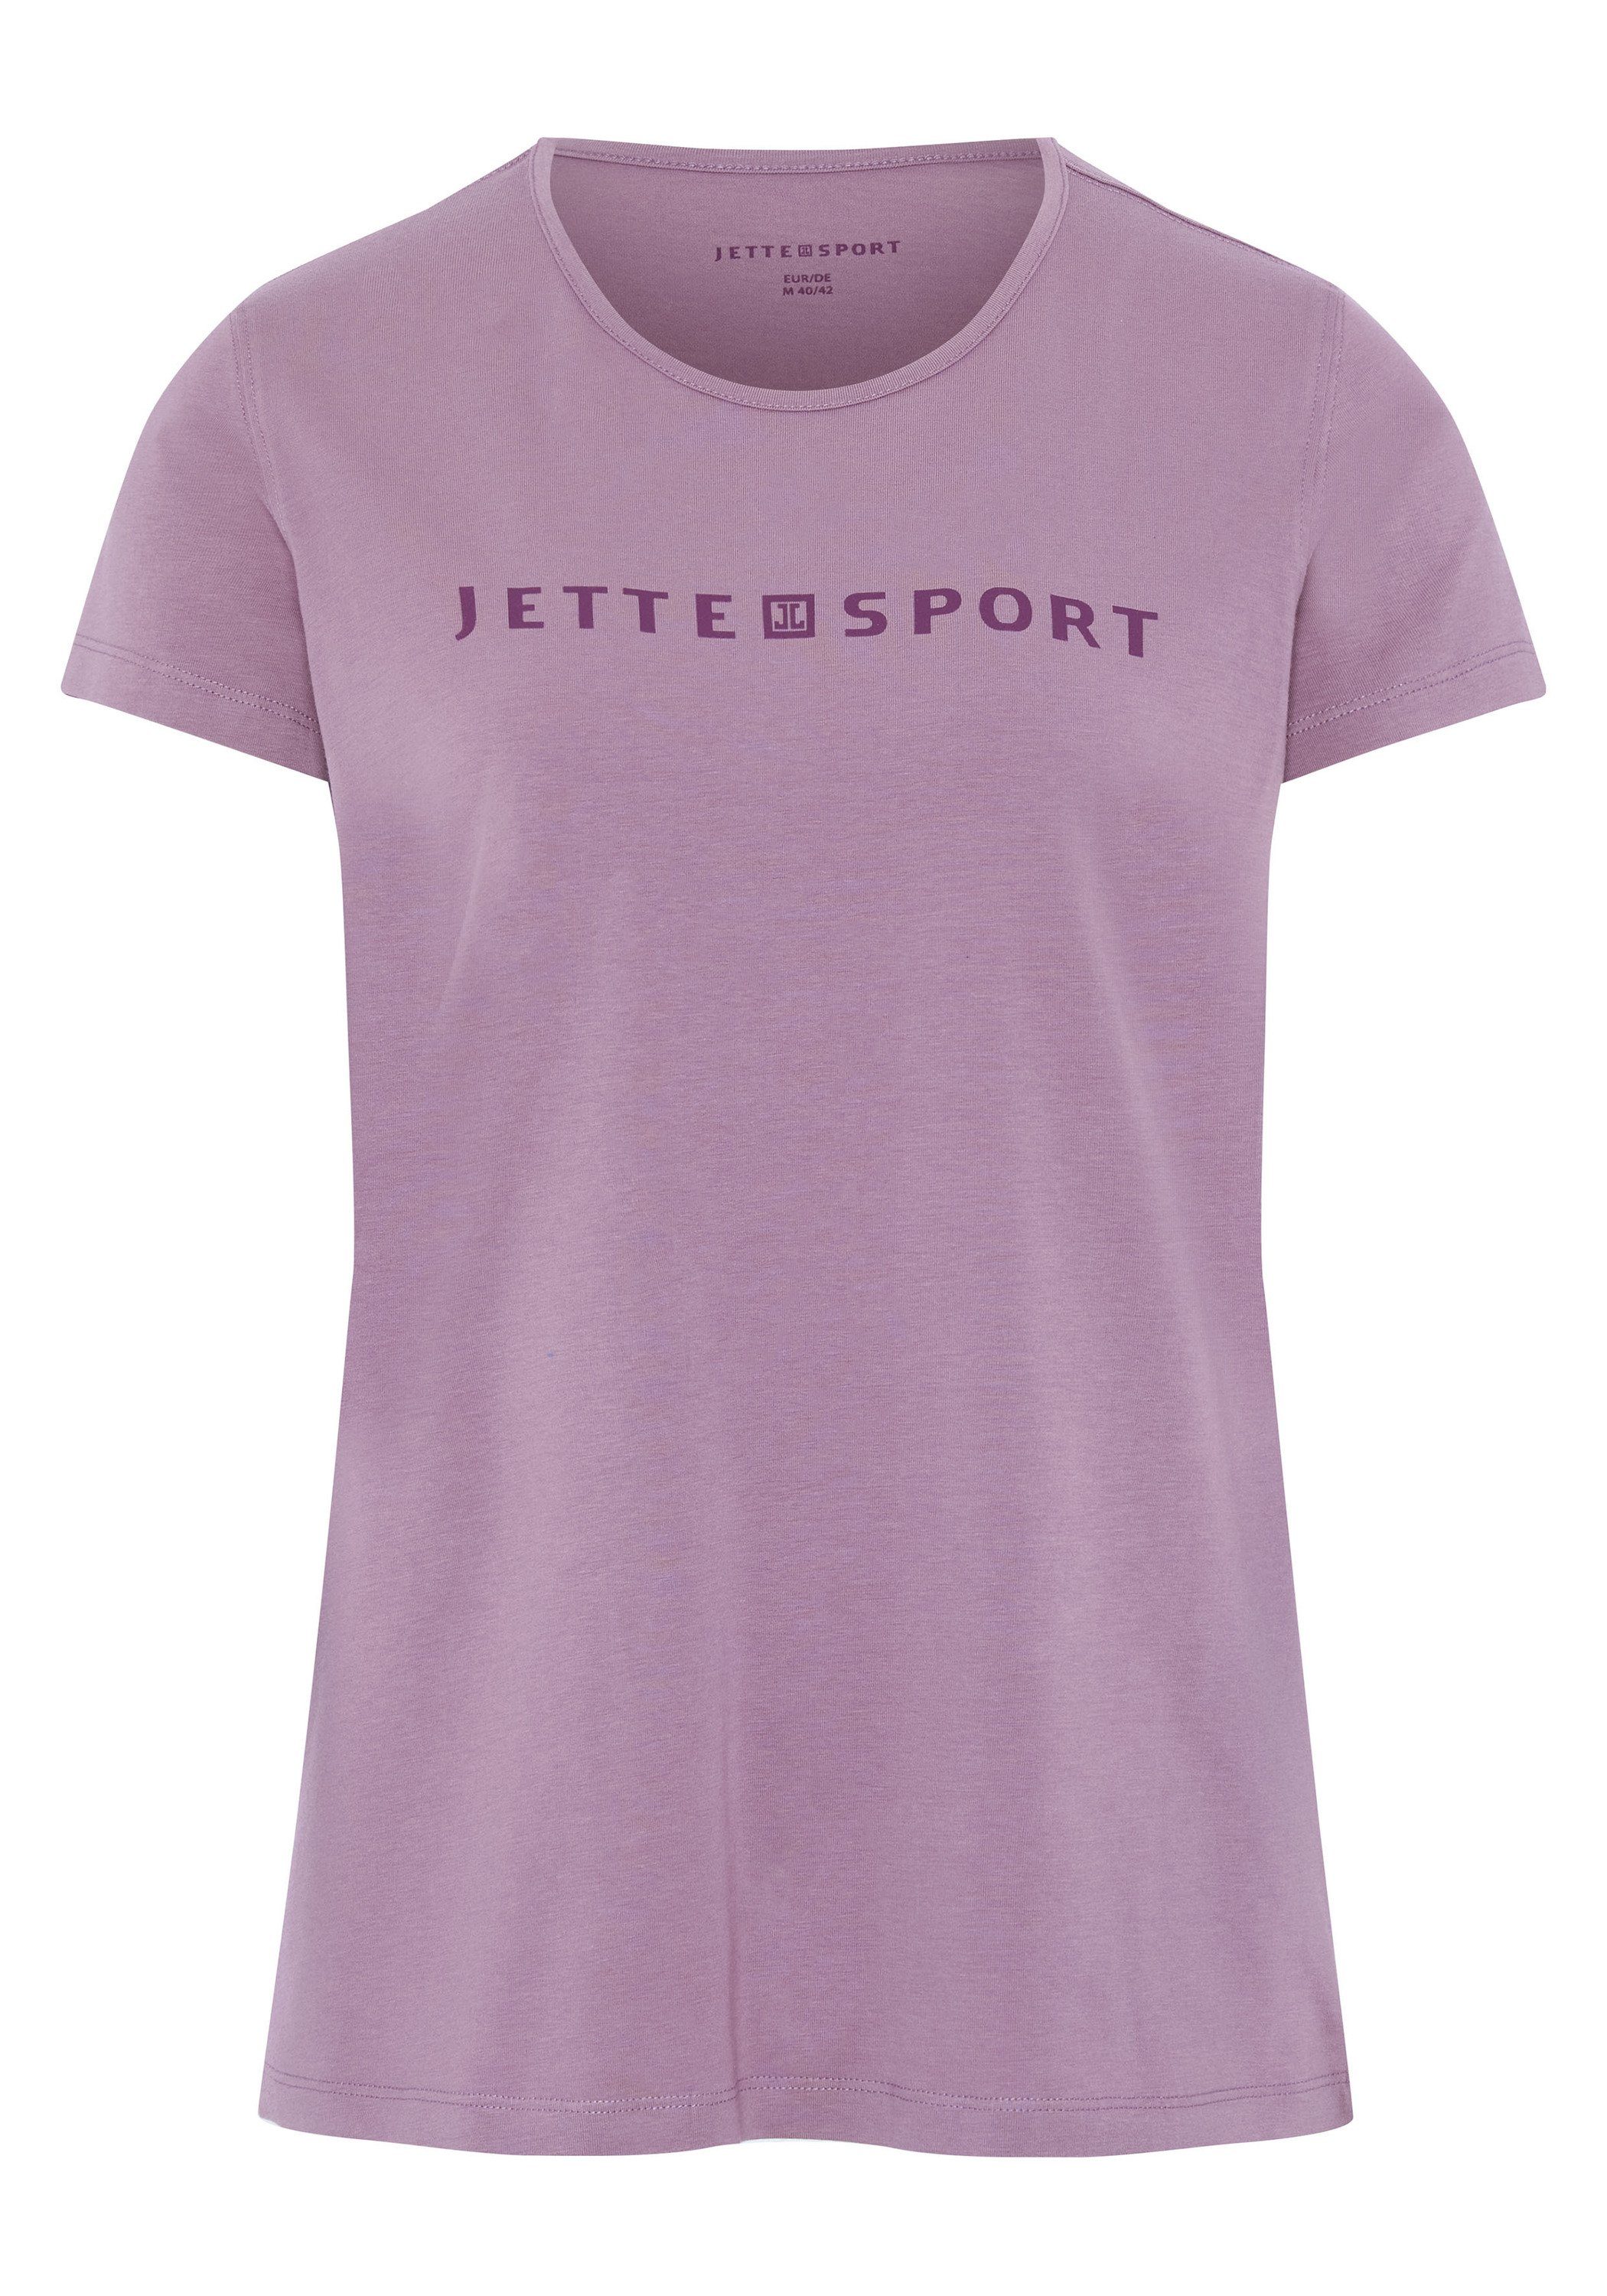 Label-Print 18-3211 SPORT Print-Shirt Grapeade mit JETTE